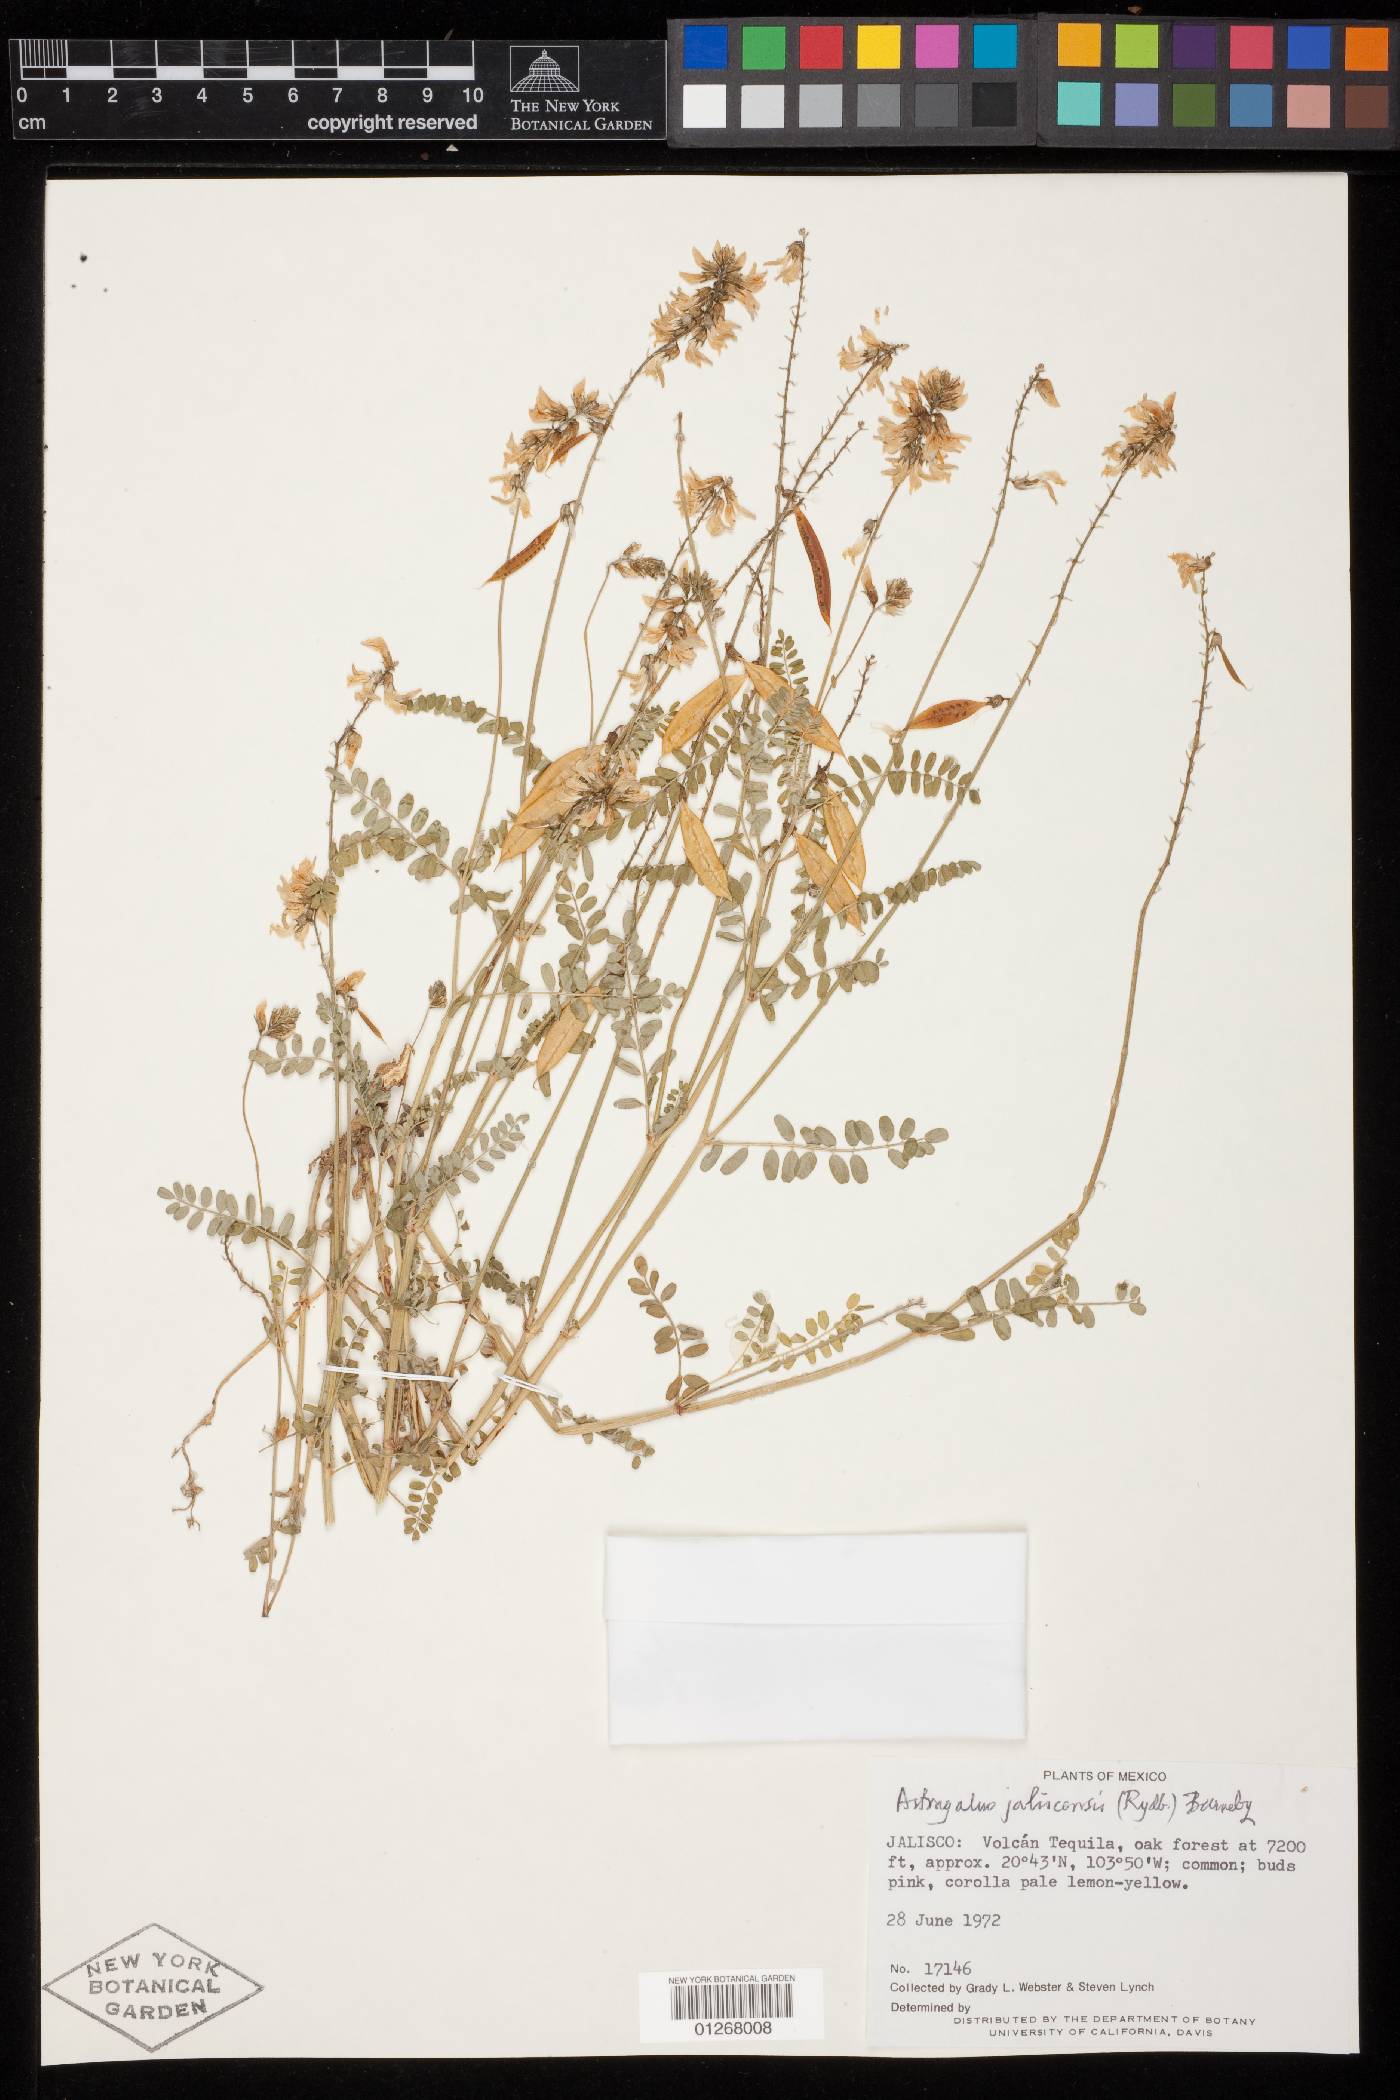 Astragalus jaliscensis image